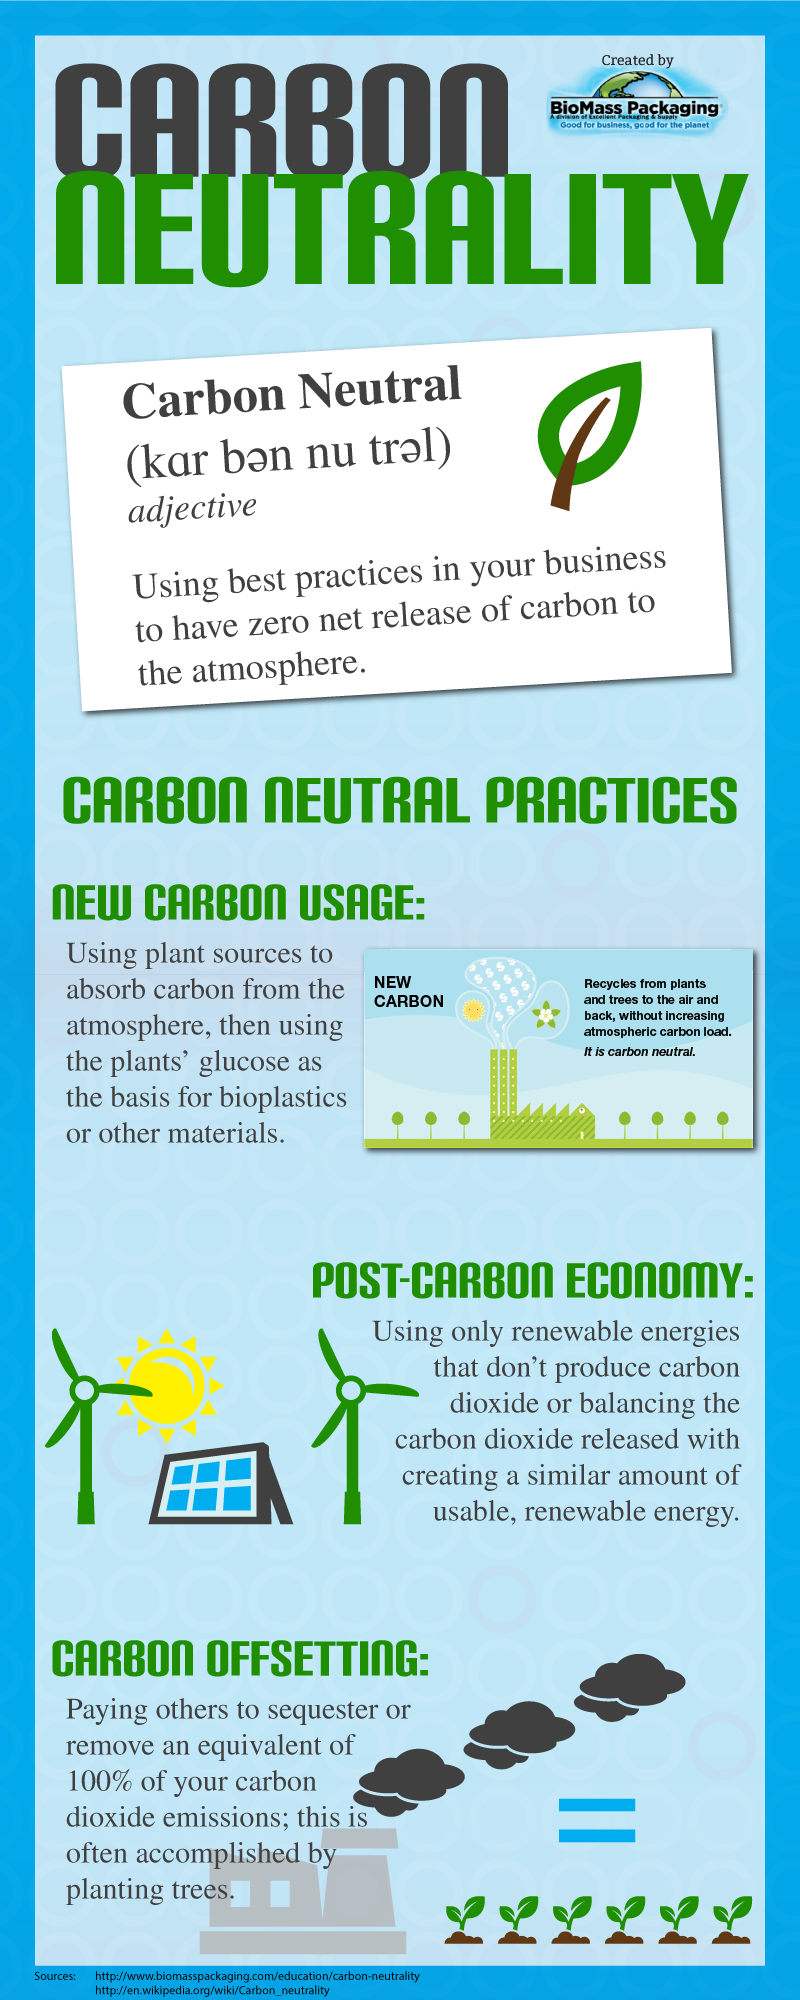 Be carbon neutral